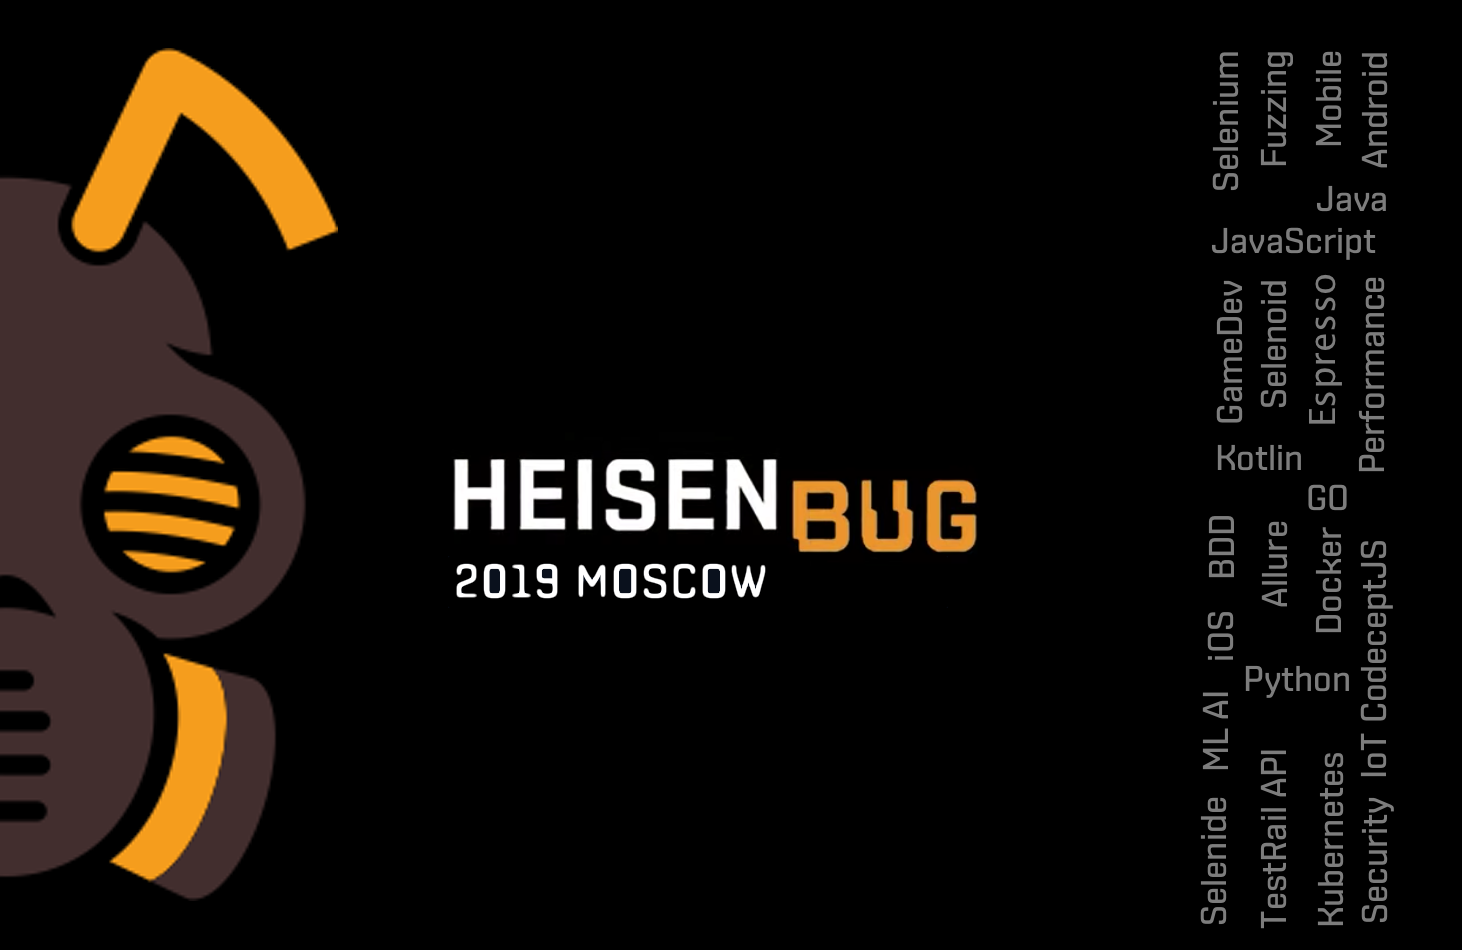 Tоп-10: лучшие доклады Heisenbug 2019 Moscow - 1